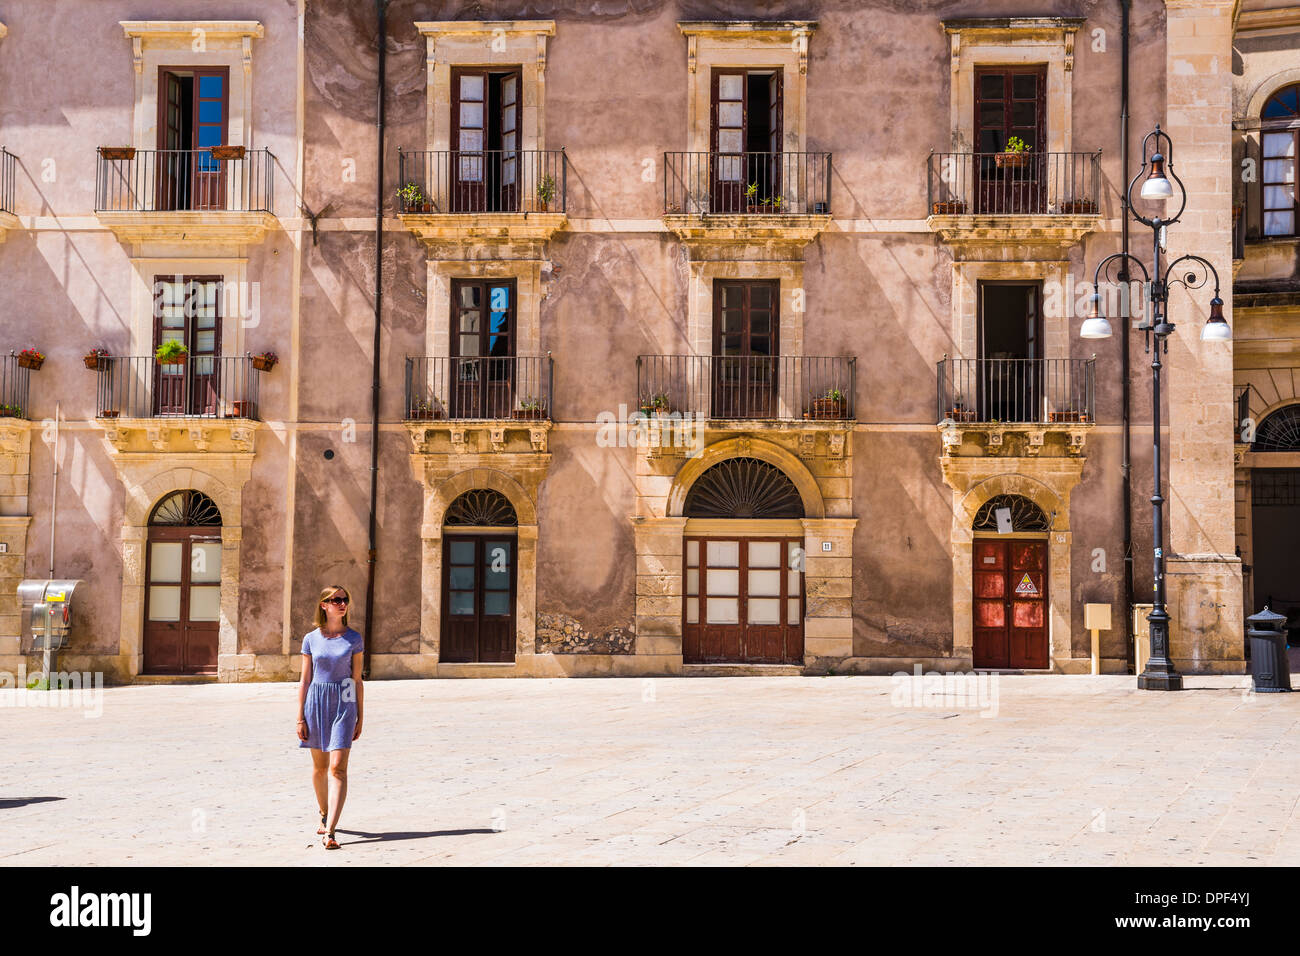 Woman on holiday, visiting Piazza Duomo in Ortigia (Ortygia), Syracuse (Siracusa), Sicily, Italy, Europe Stock Photo